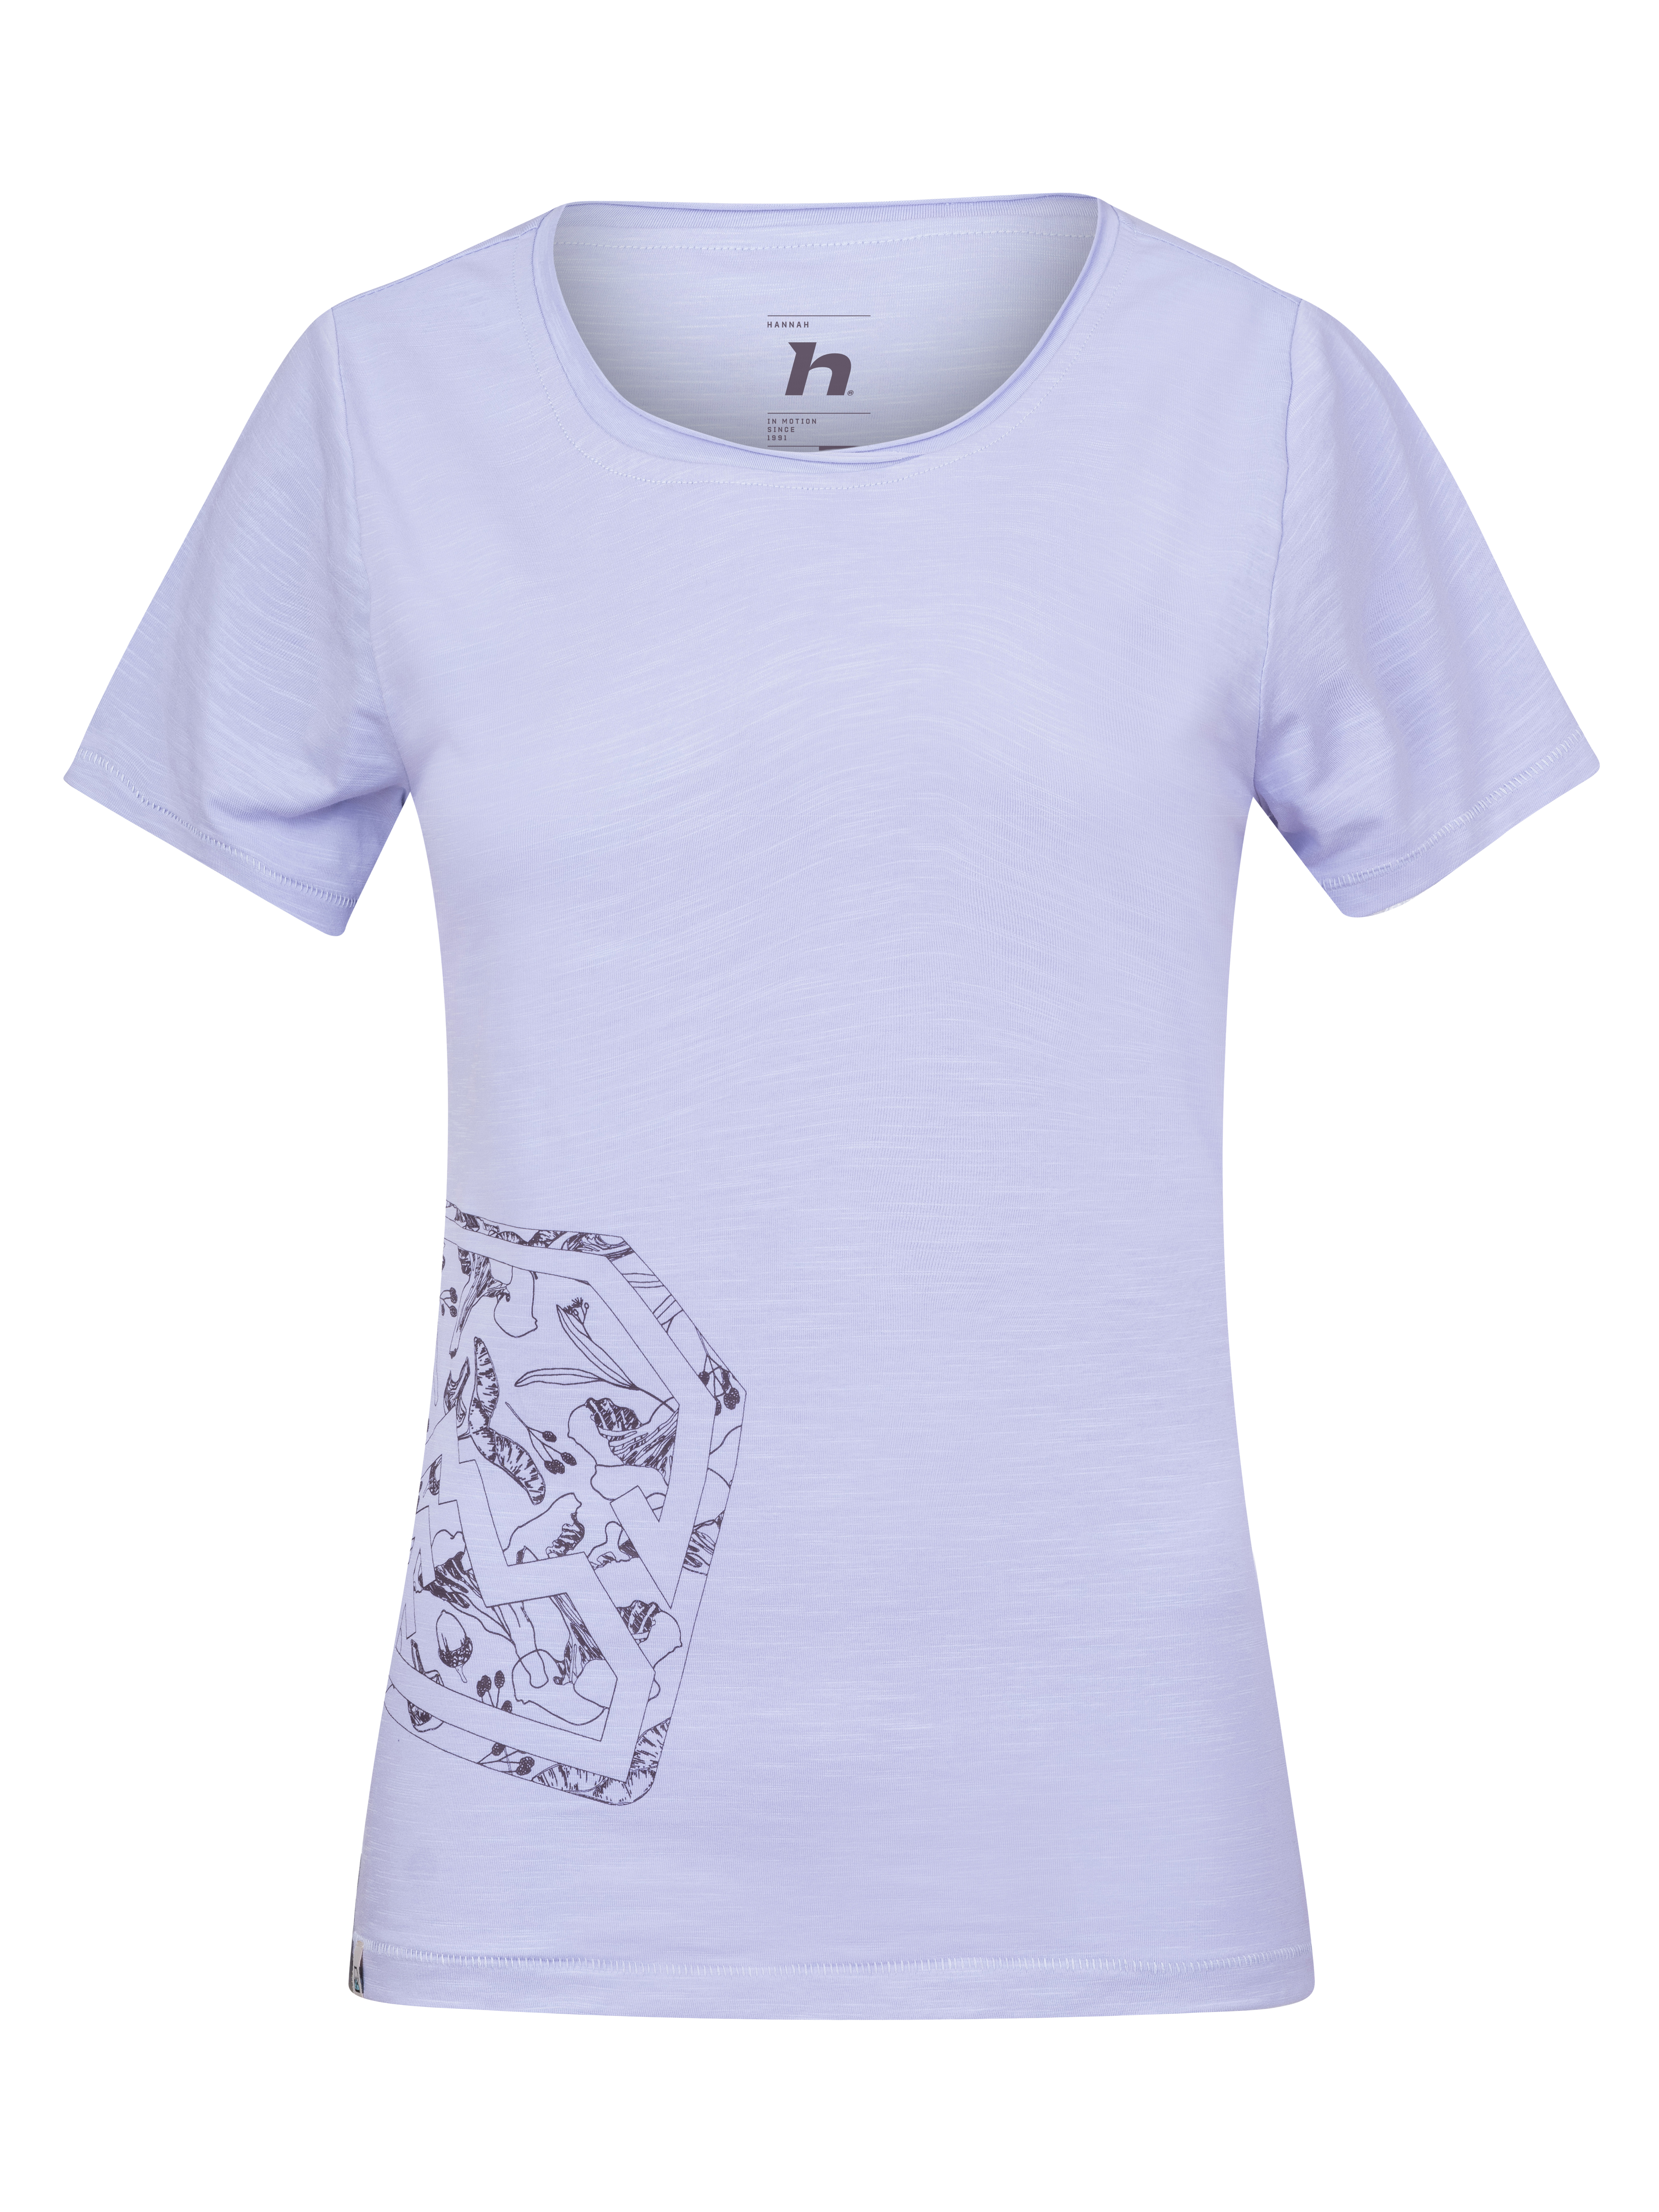 Women's cotton T-shirt Hannah ZOEY II purple heather